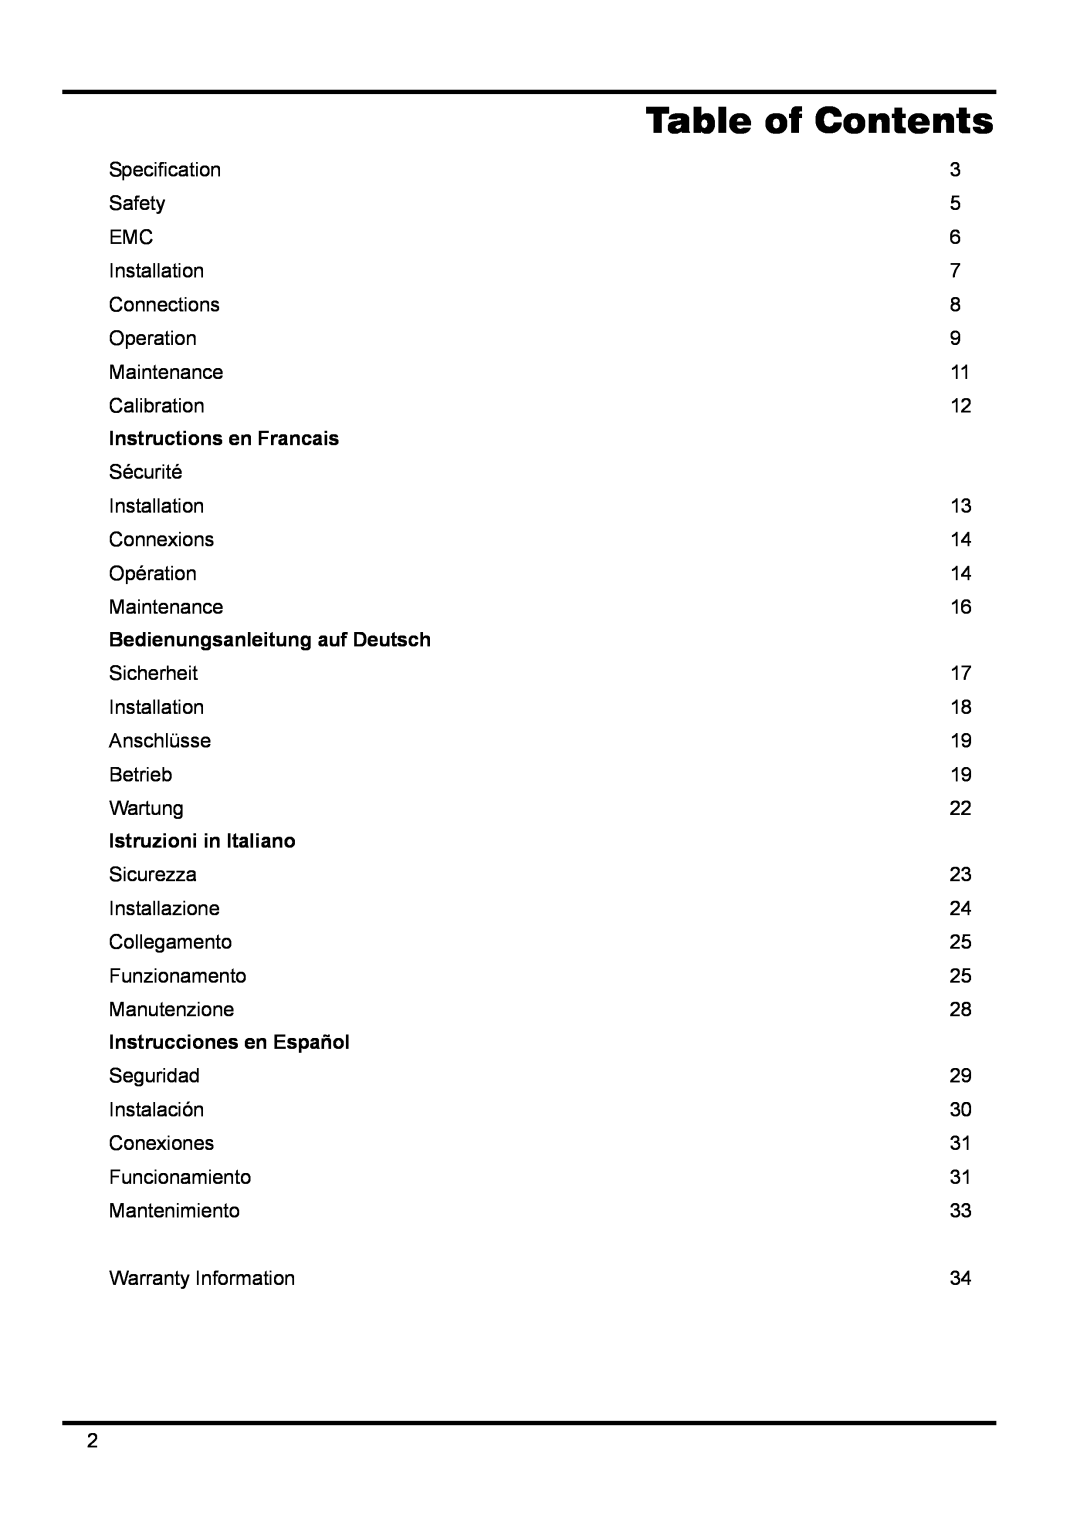 Xantrex Technology XPF 35-10 manual Table of Contents, Instructions en Francais, Bedienungsanleitung auf Deutsch 